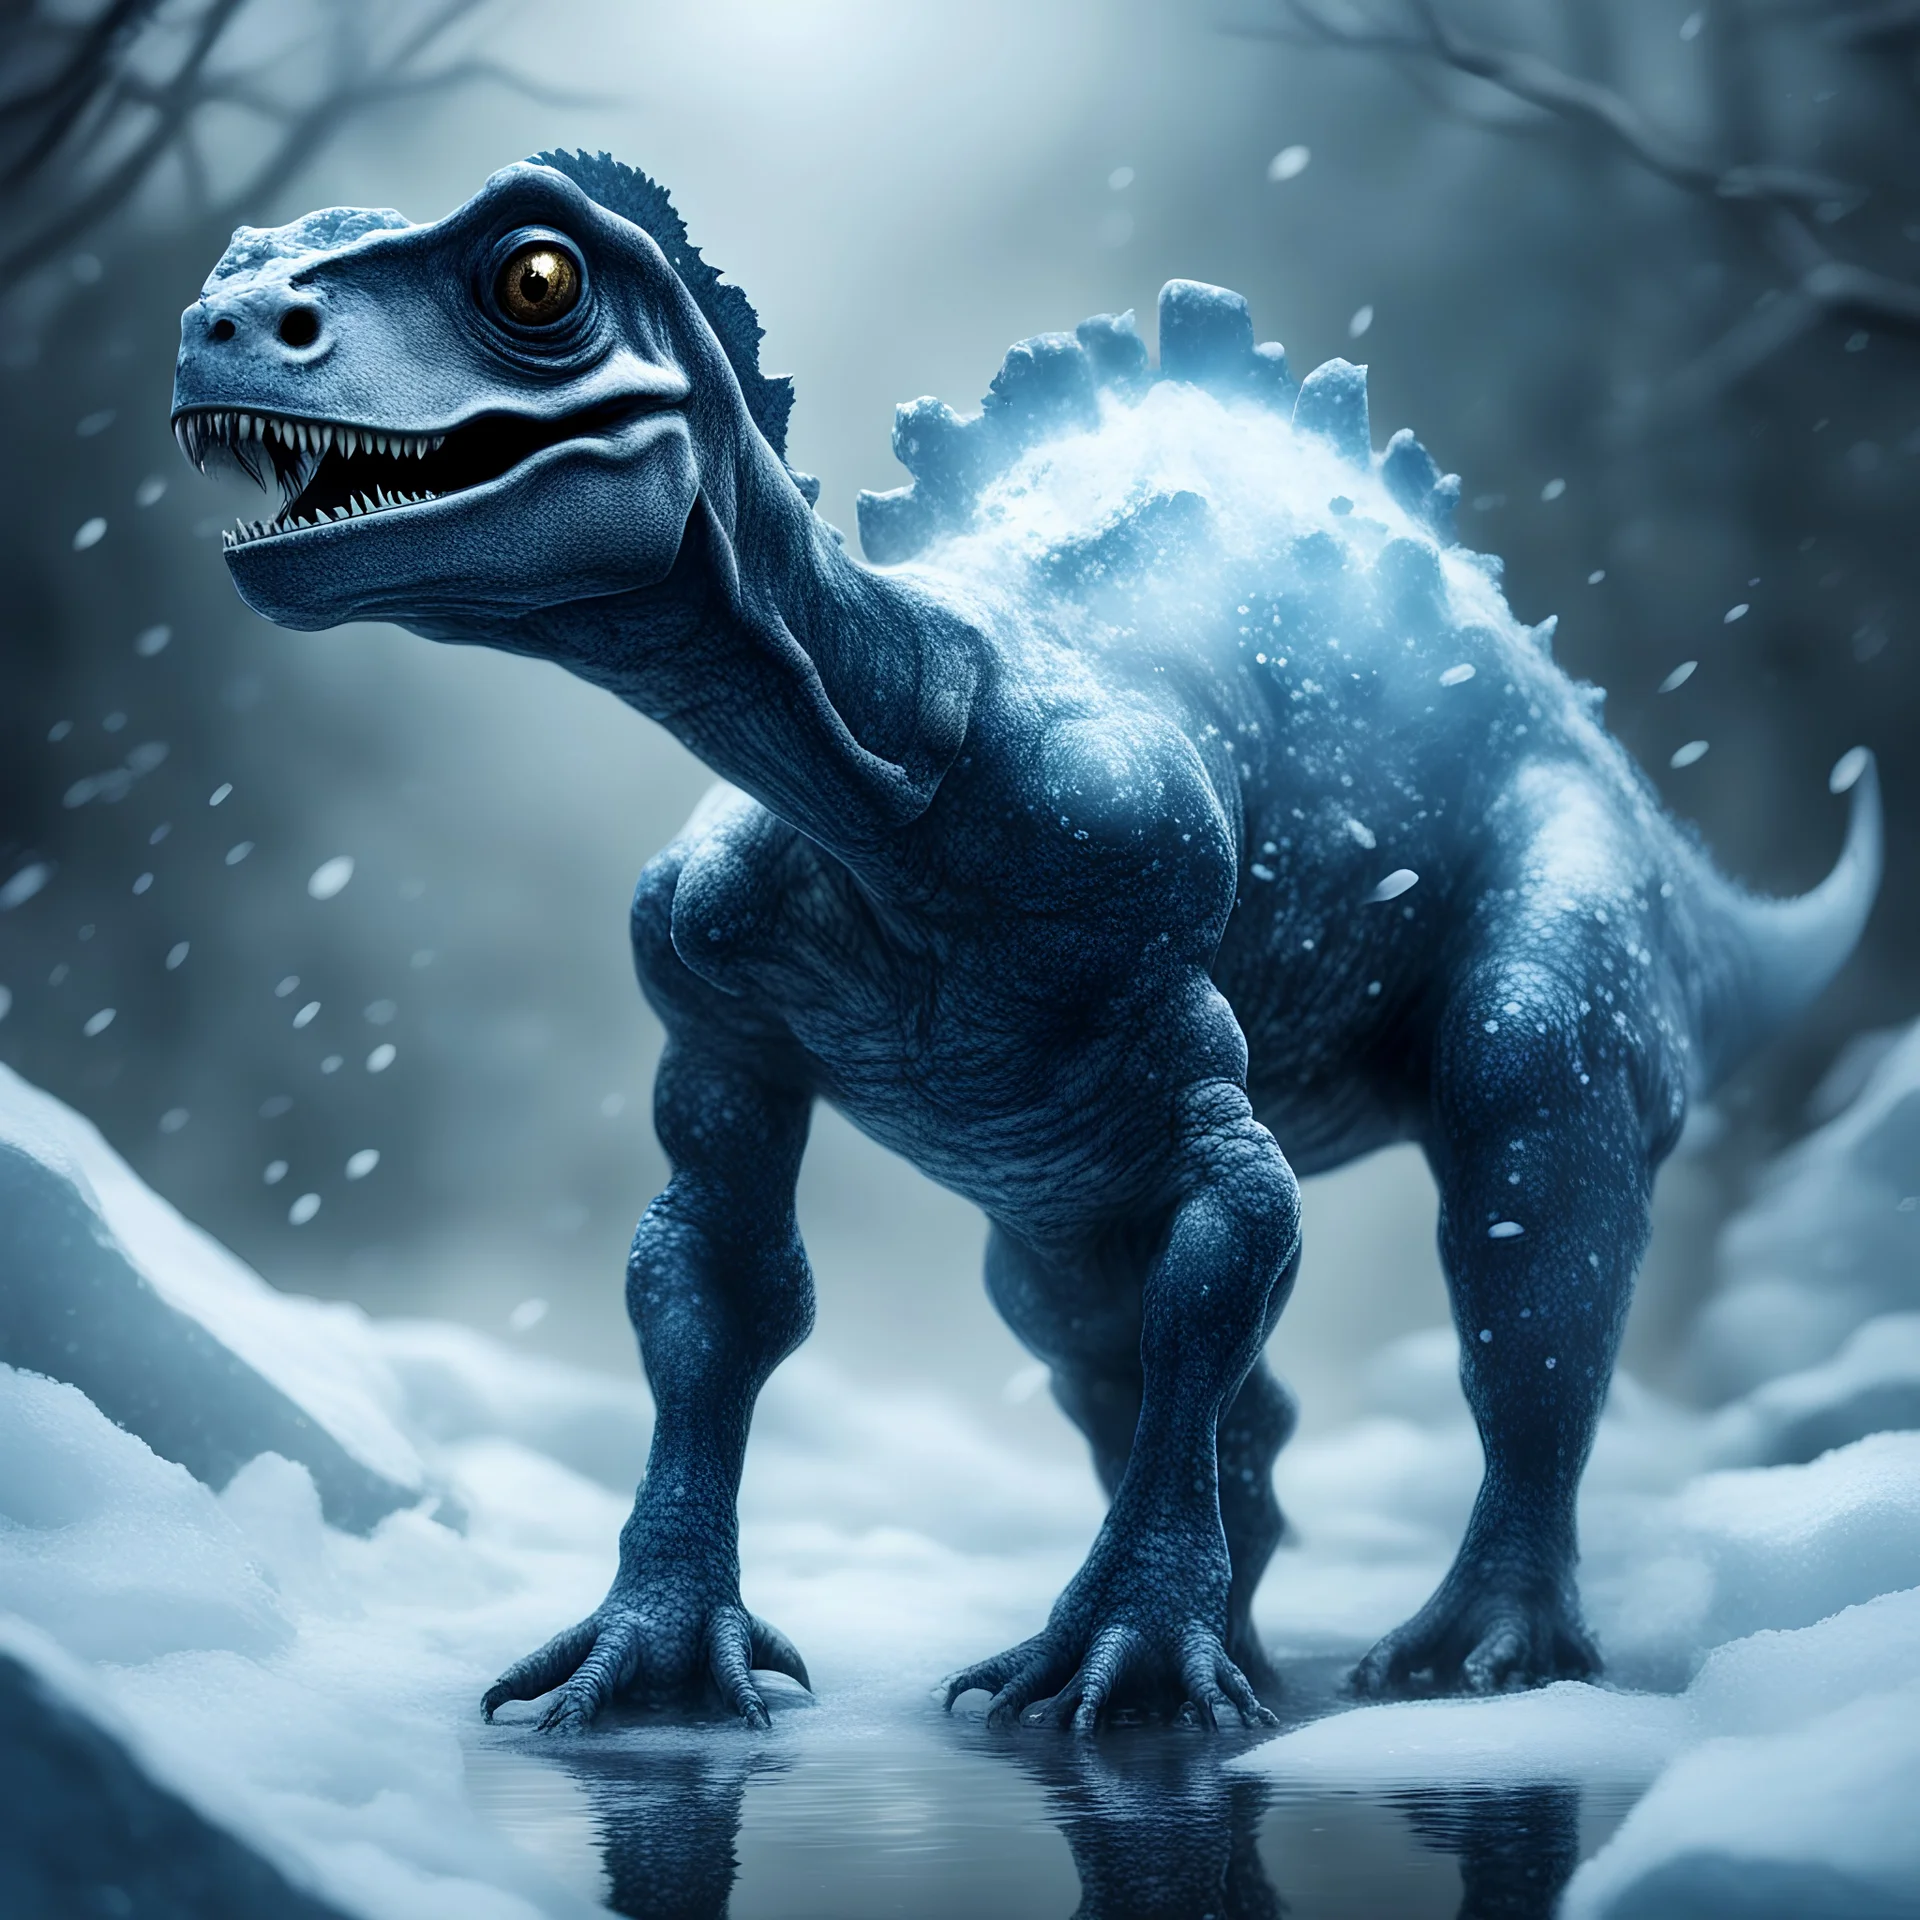 Steelcap Pachycephalosaurus in Horror icy art style